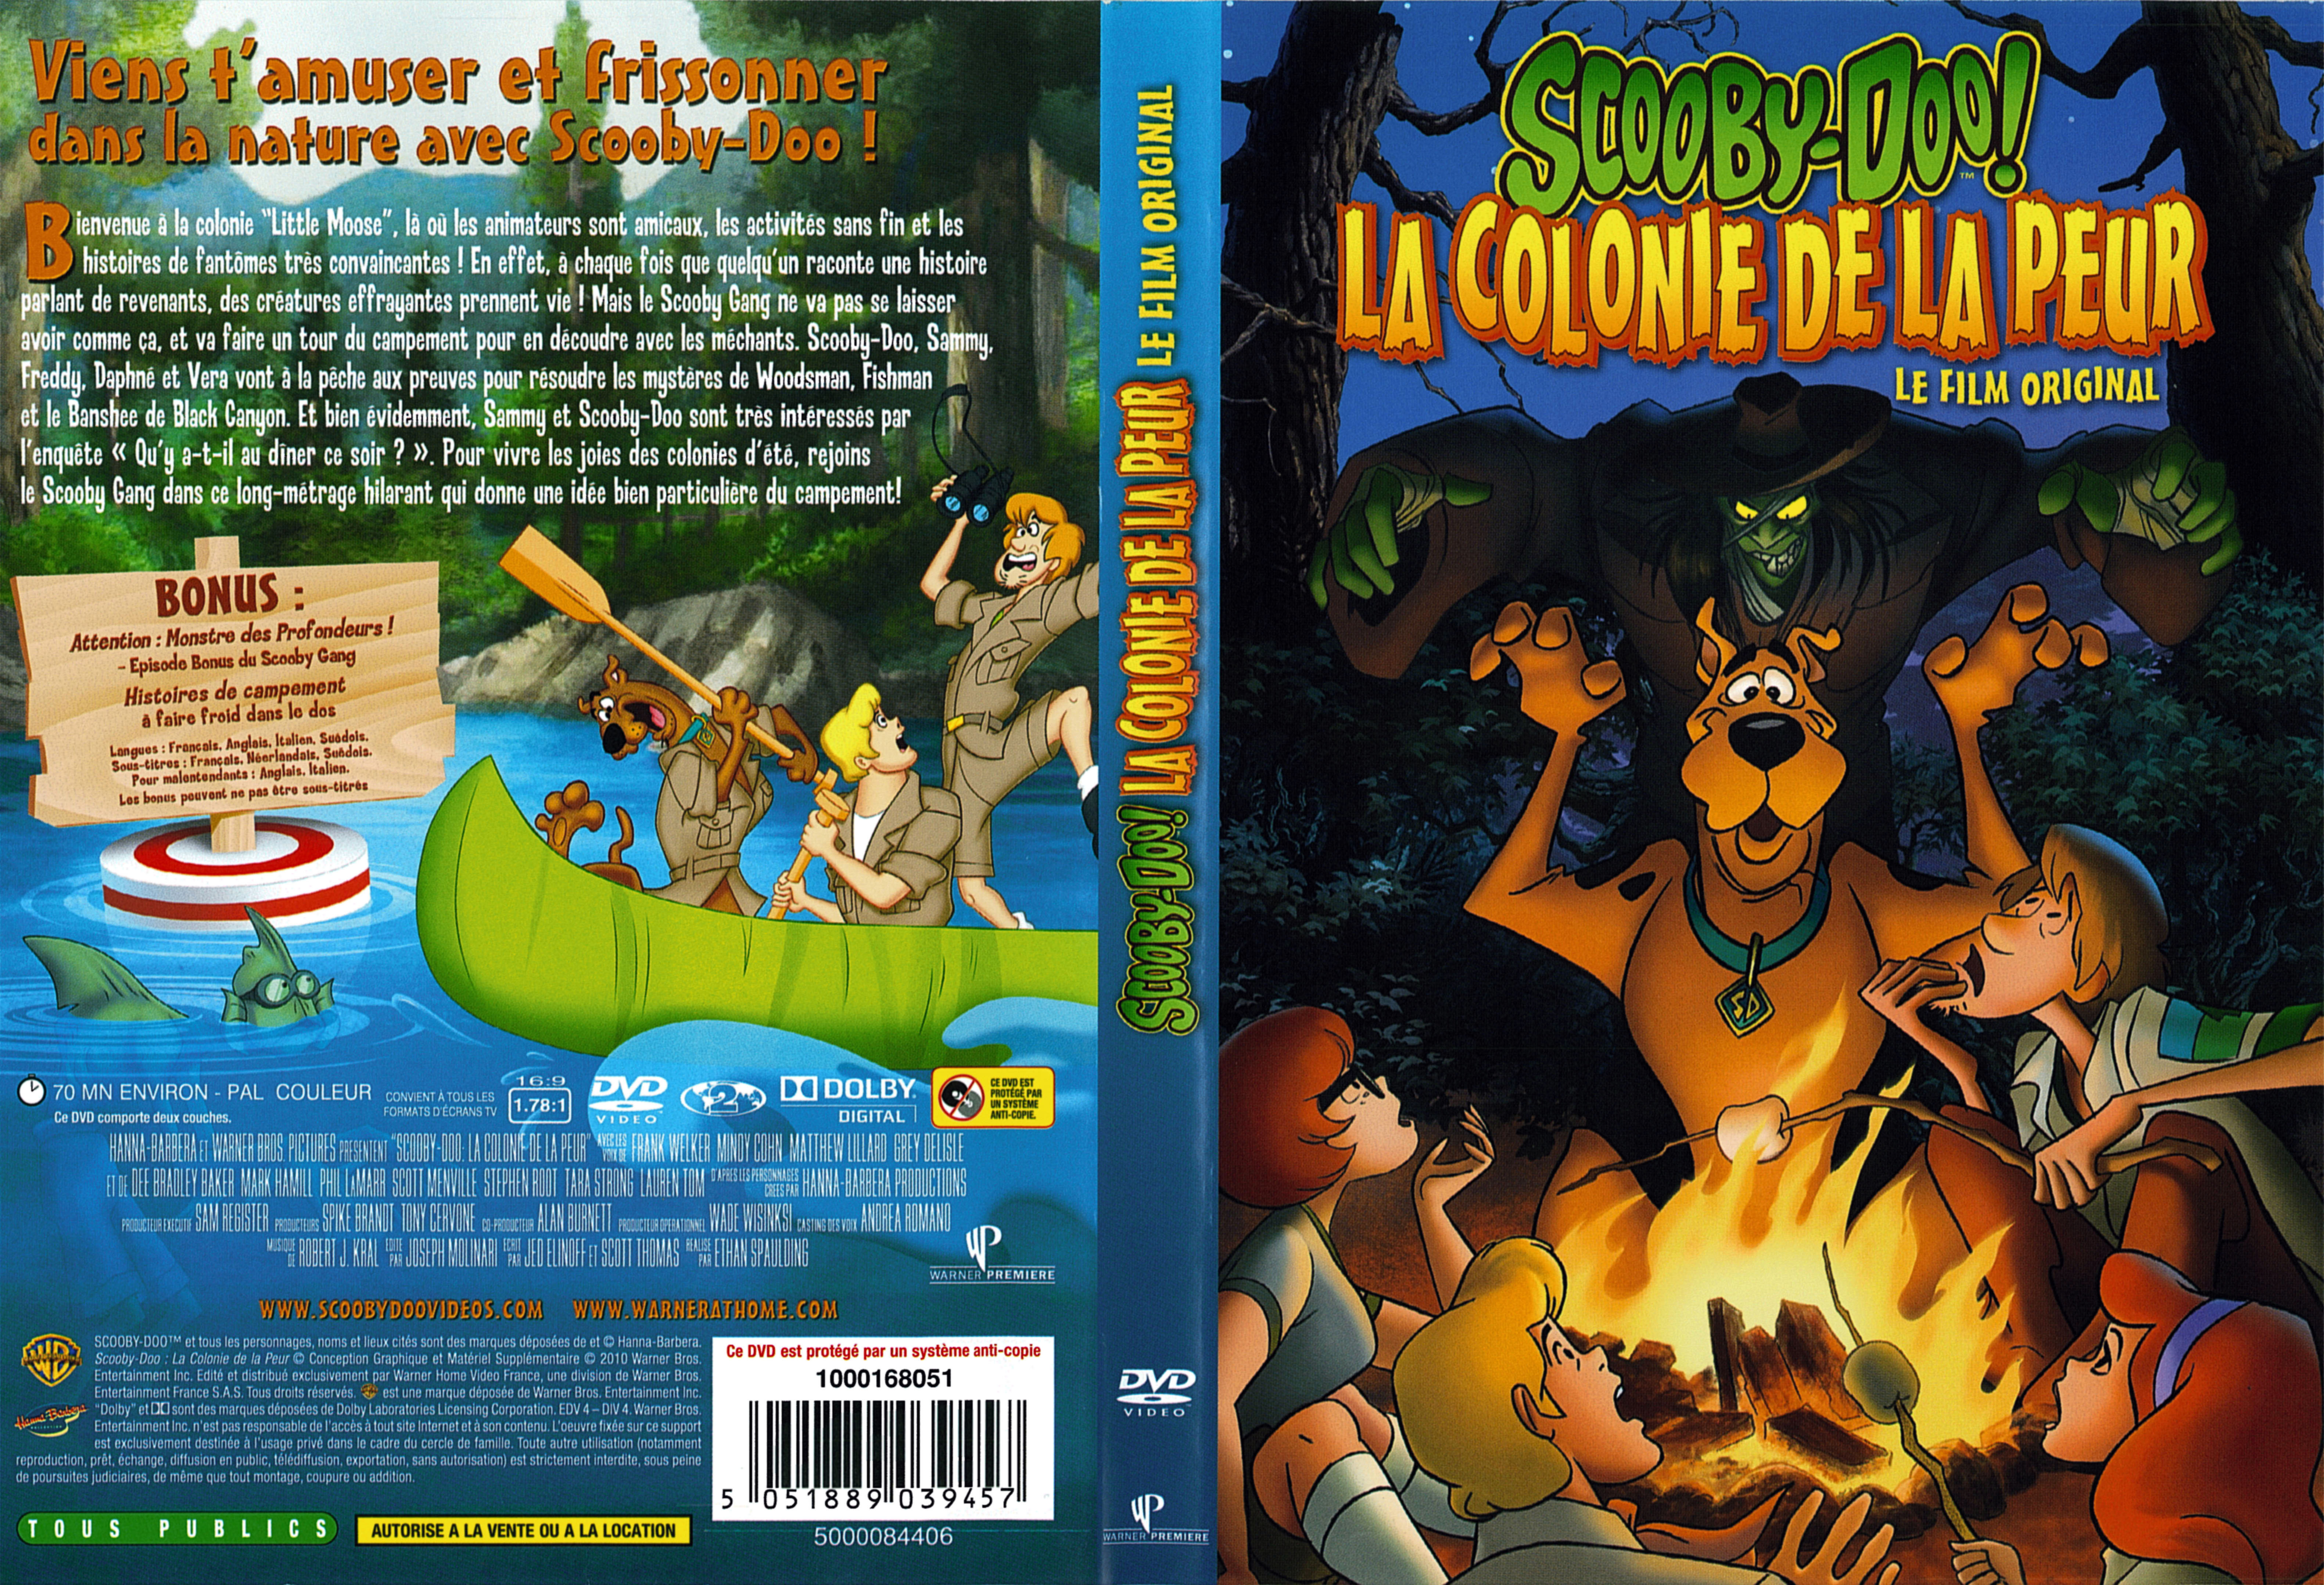 Jaquette DVD Scooby-Doo - La colonie de la peur